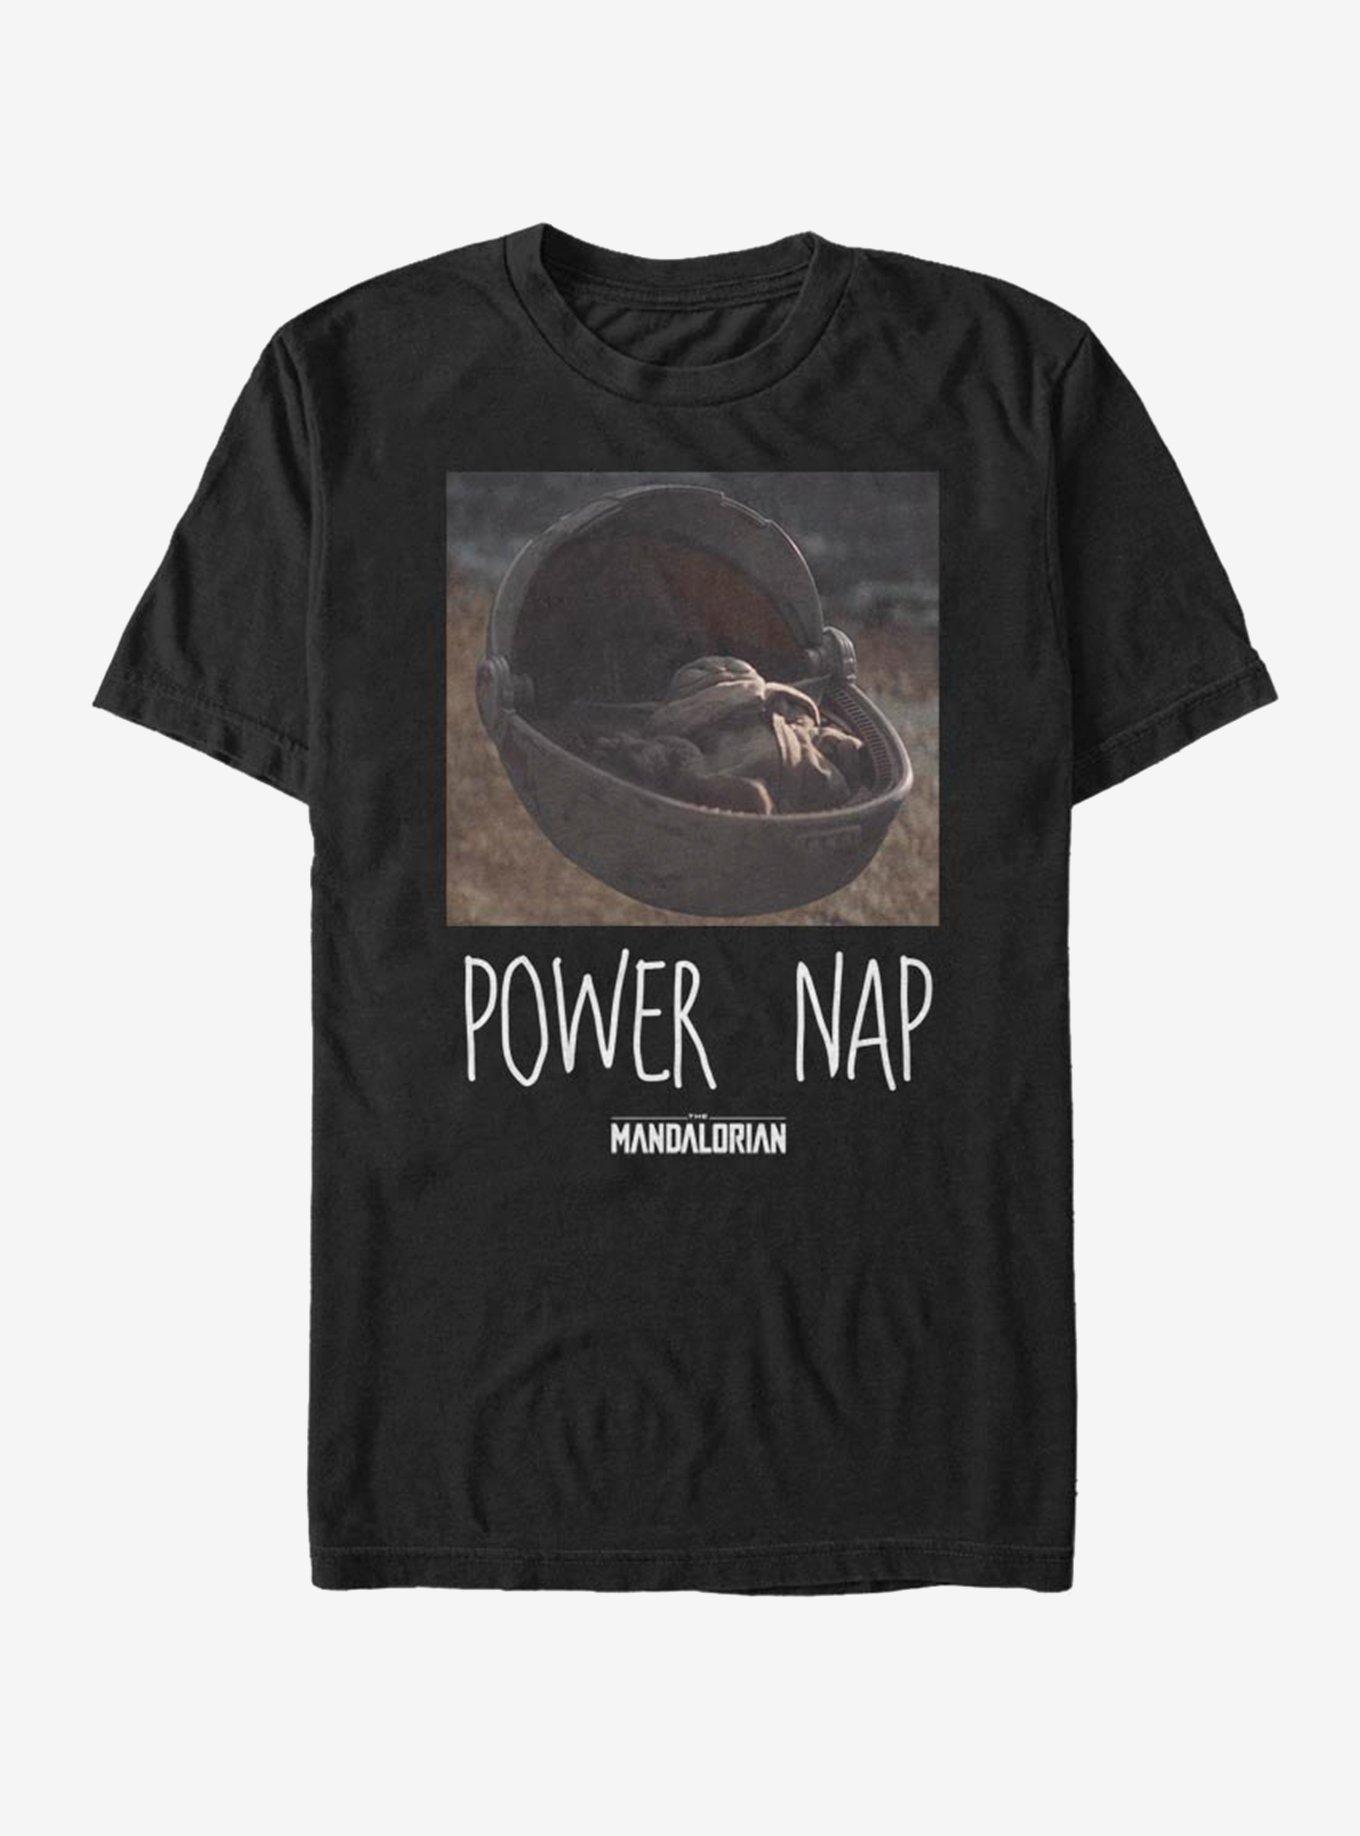 The Mandalorian Power Nap T-Shirt